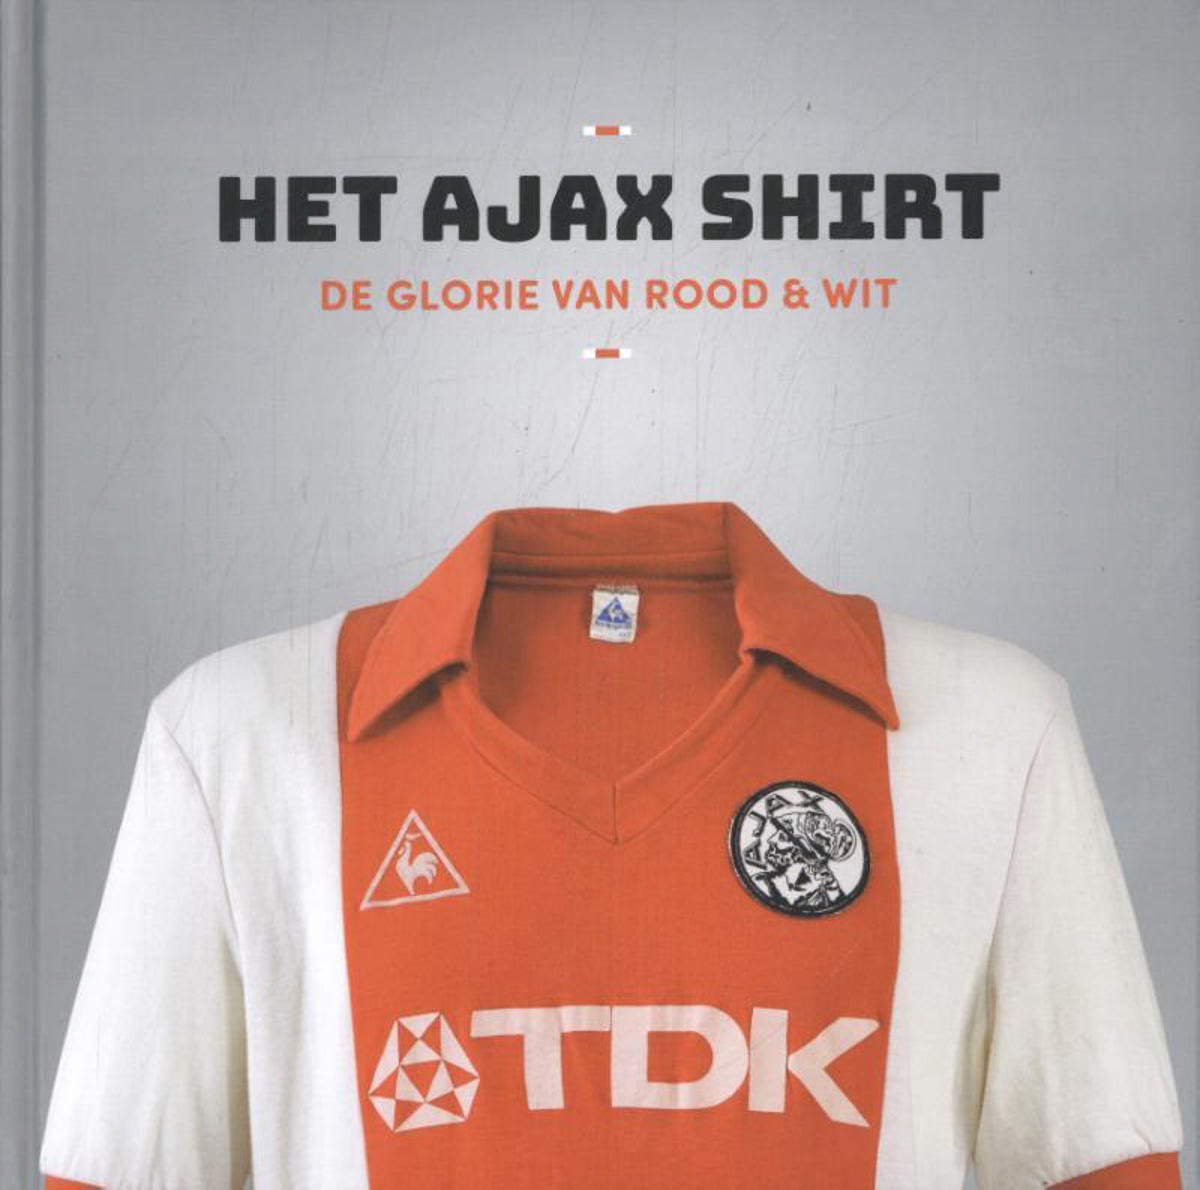 The Ajax Shirt